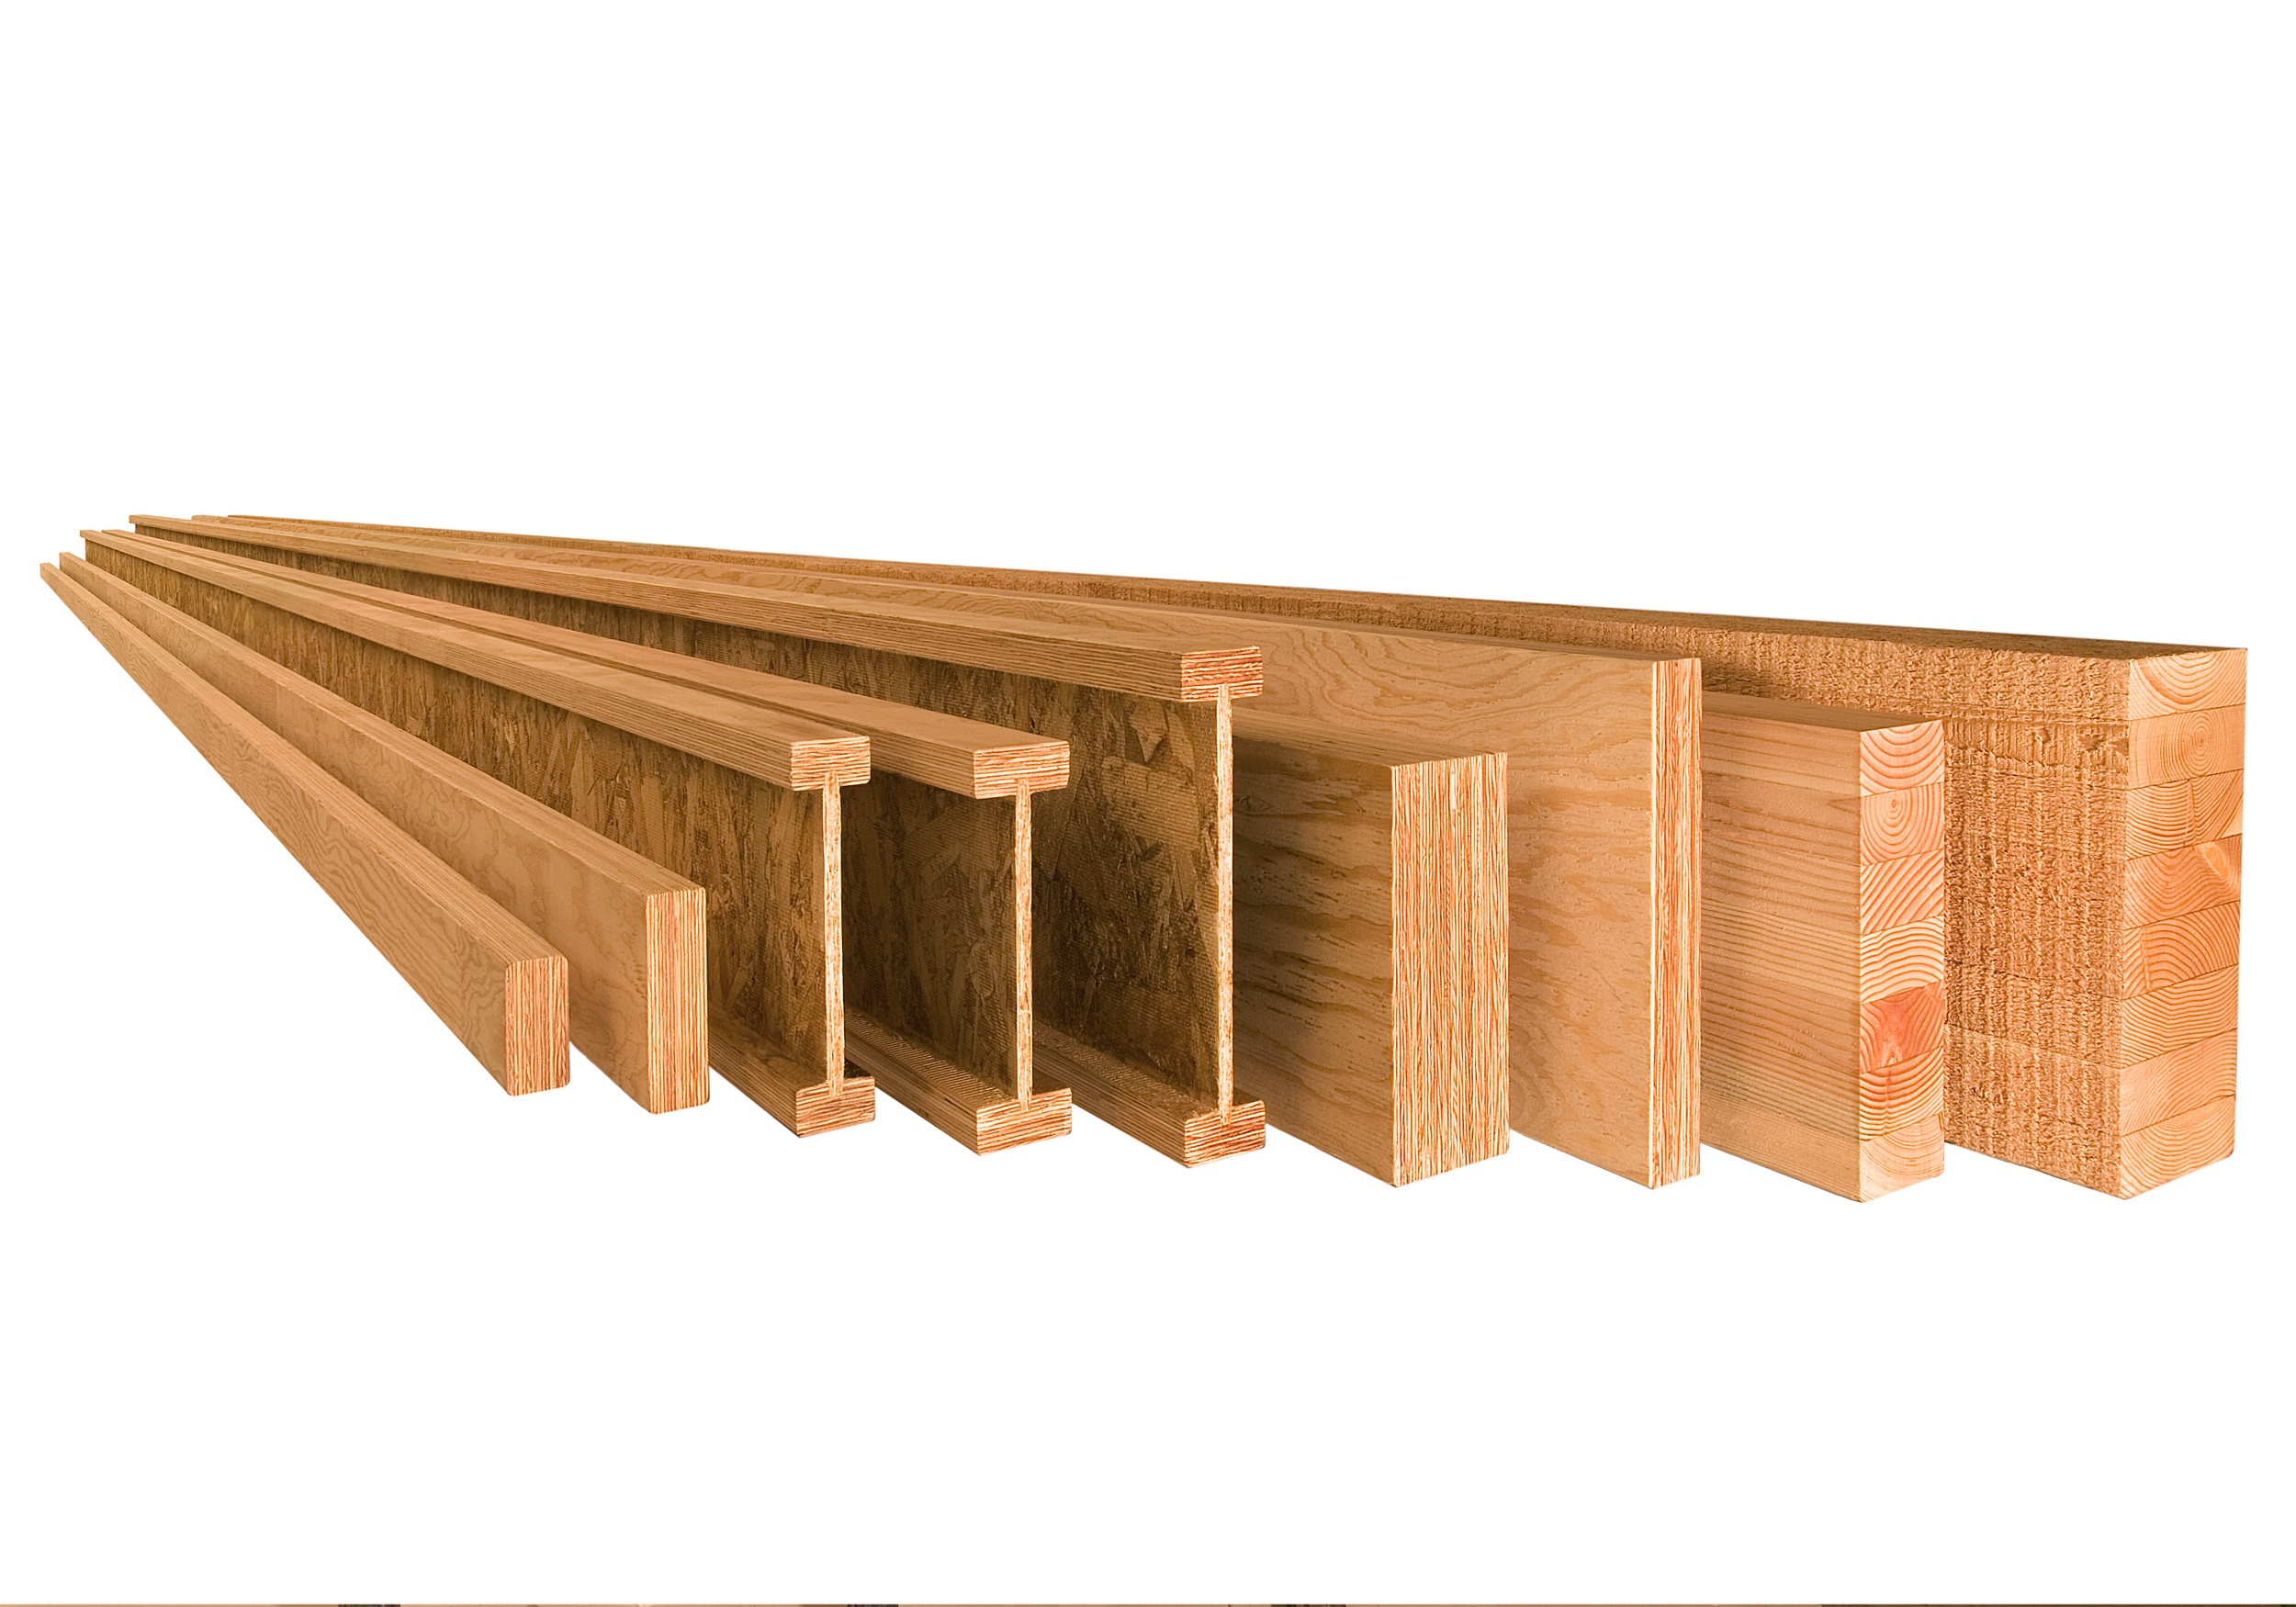 Boise Cascade Engineered Wood Product Line